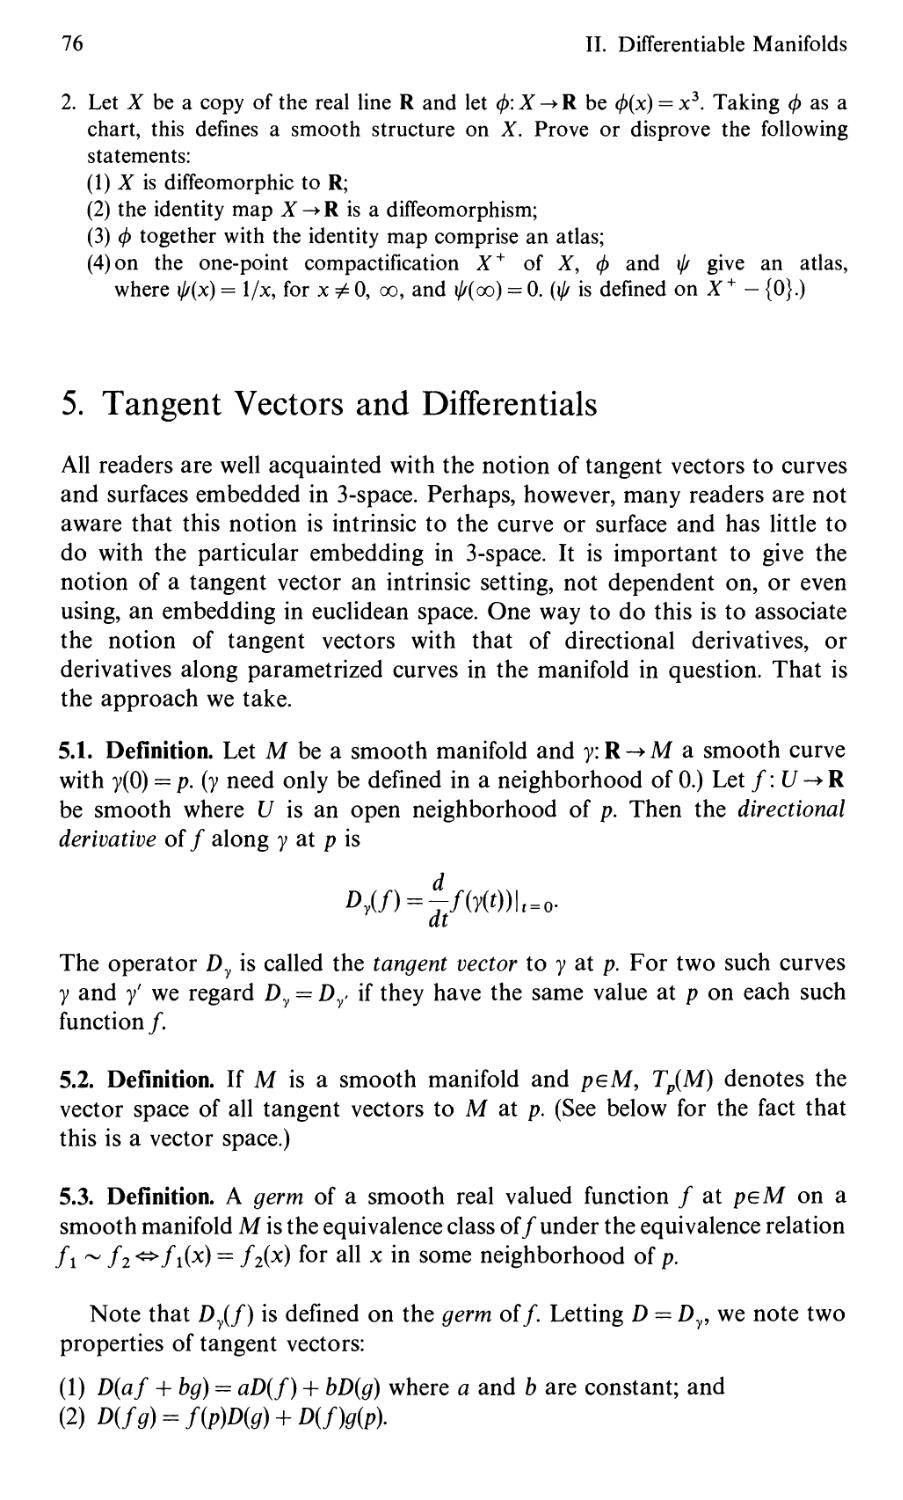 5. Tangent Vectors and Differentials